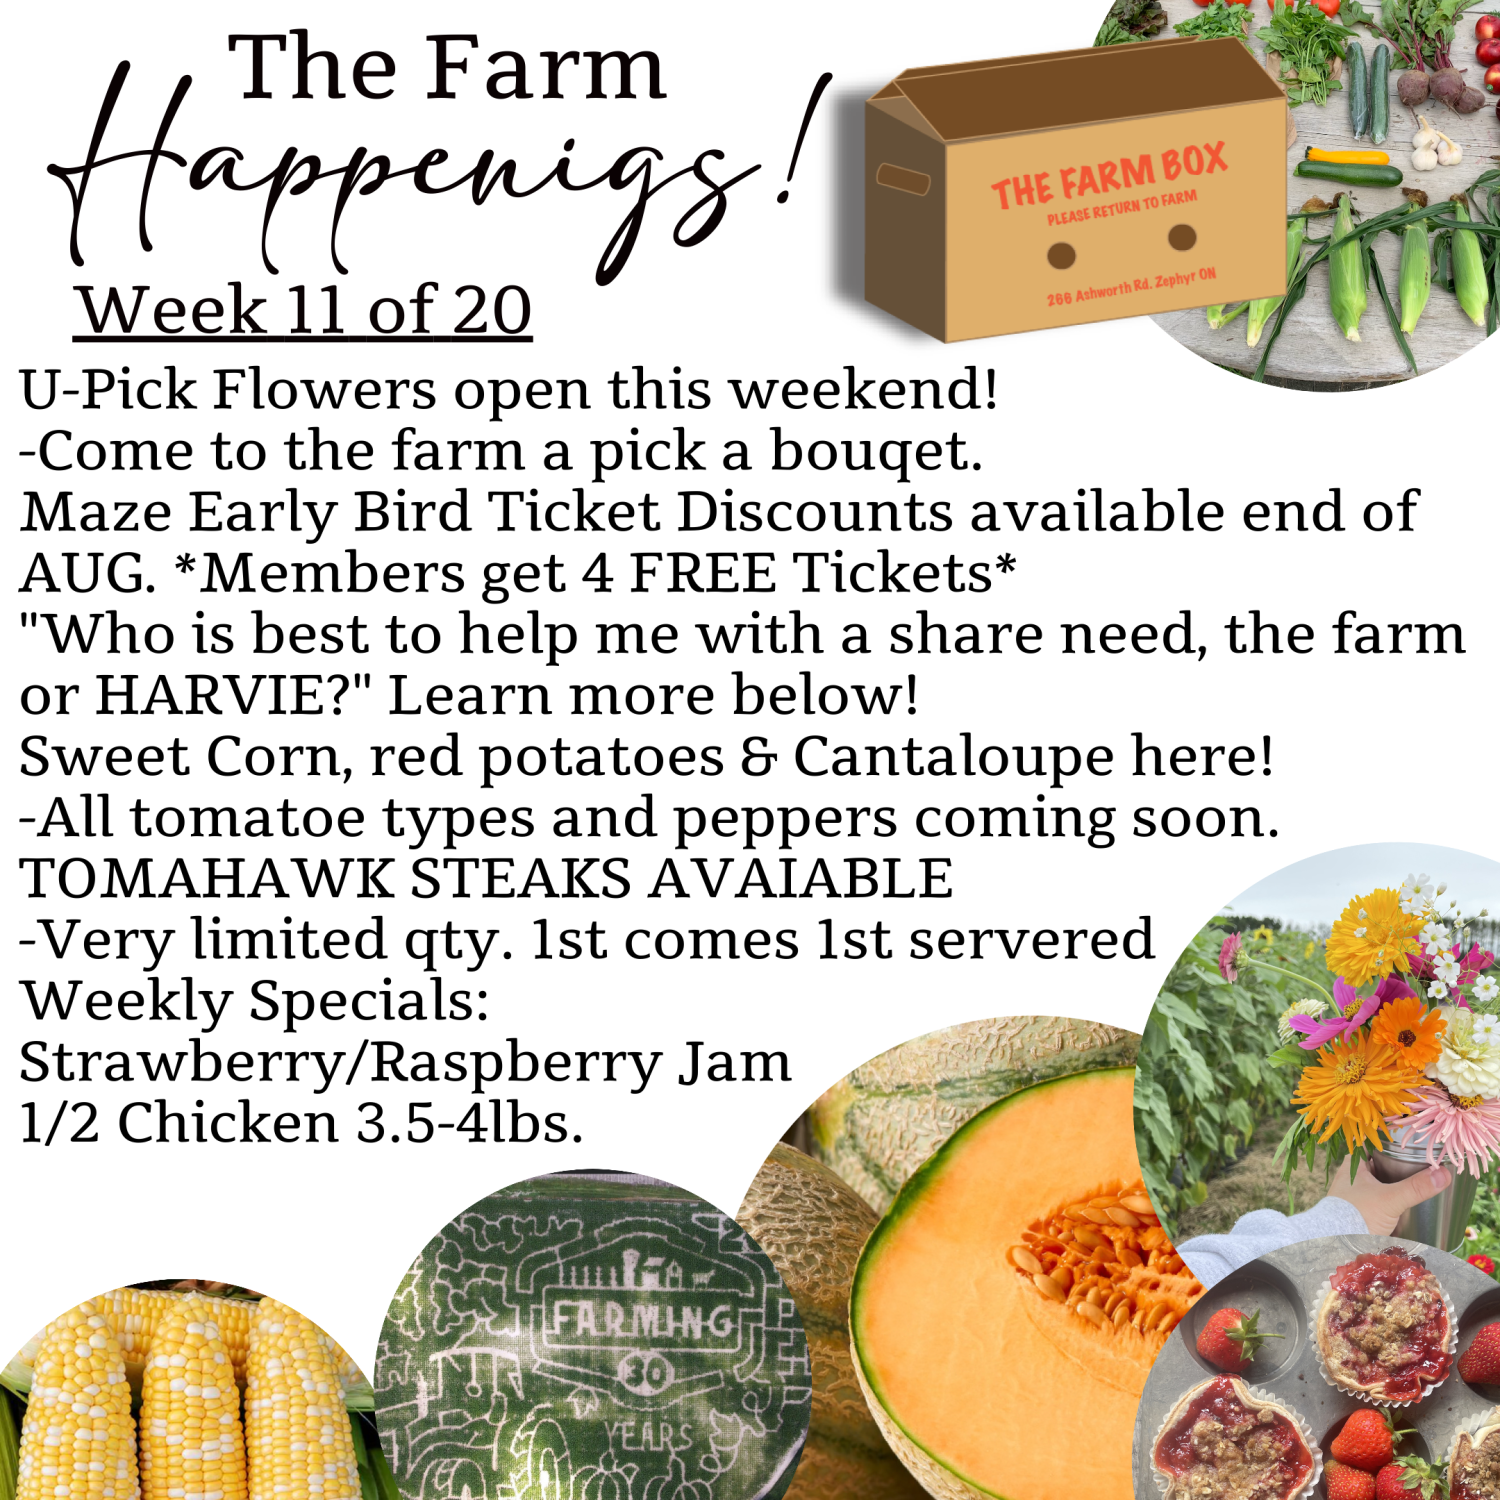 Next Happening: "The Farm Box"-Coopers CSA Farm Farm Happenings: Week 11 of 20